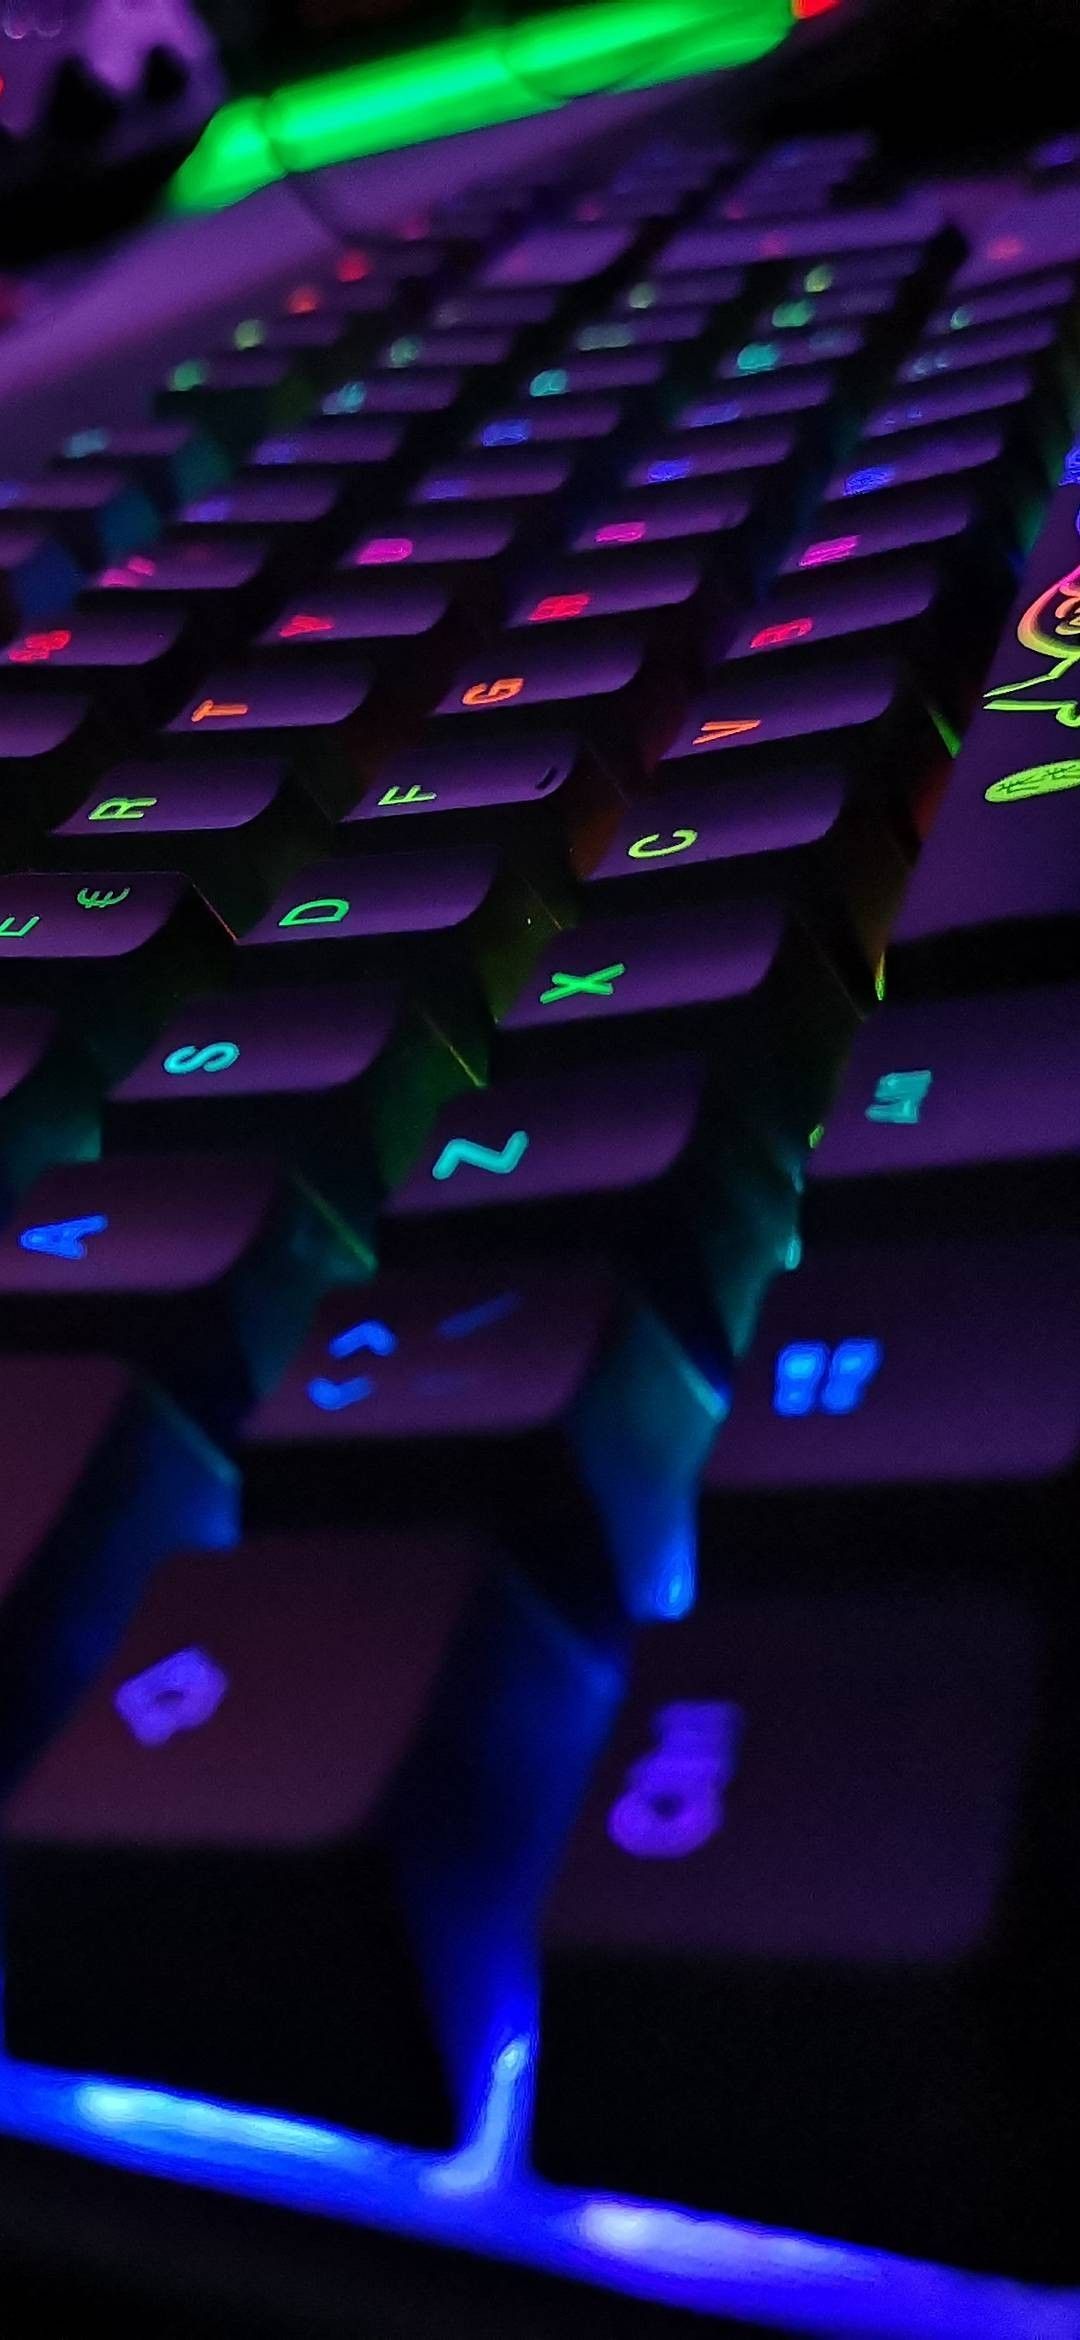 RGB Keyboard Wallpaper. Game wallpaper .com